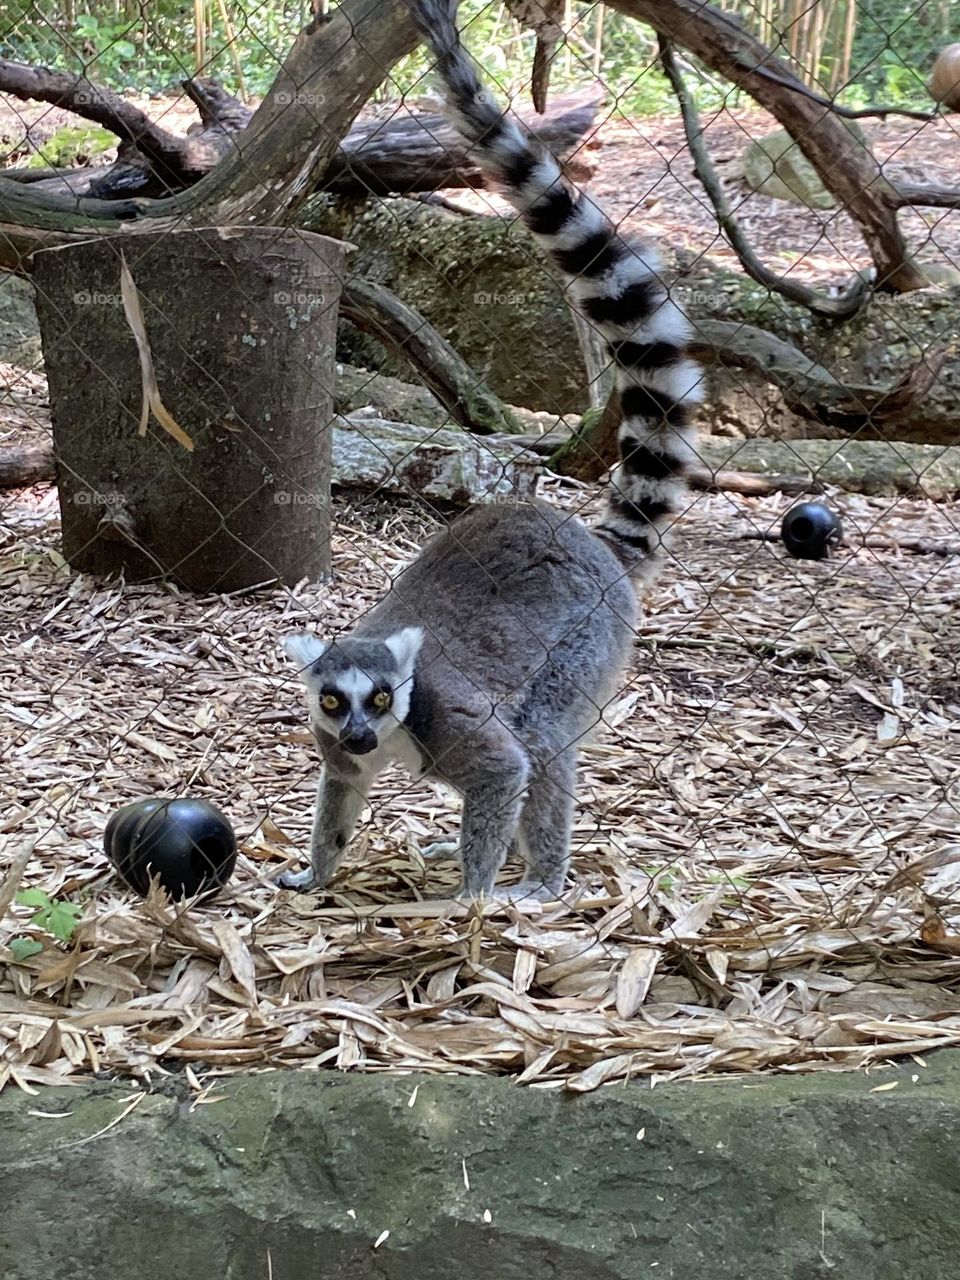 Lemur at the Nashville zoo 